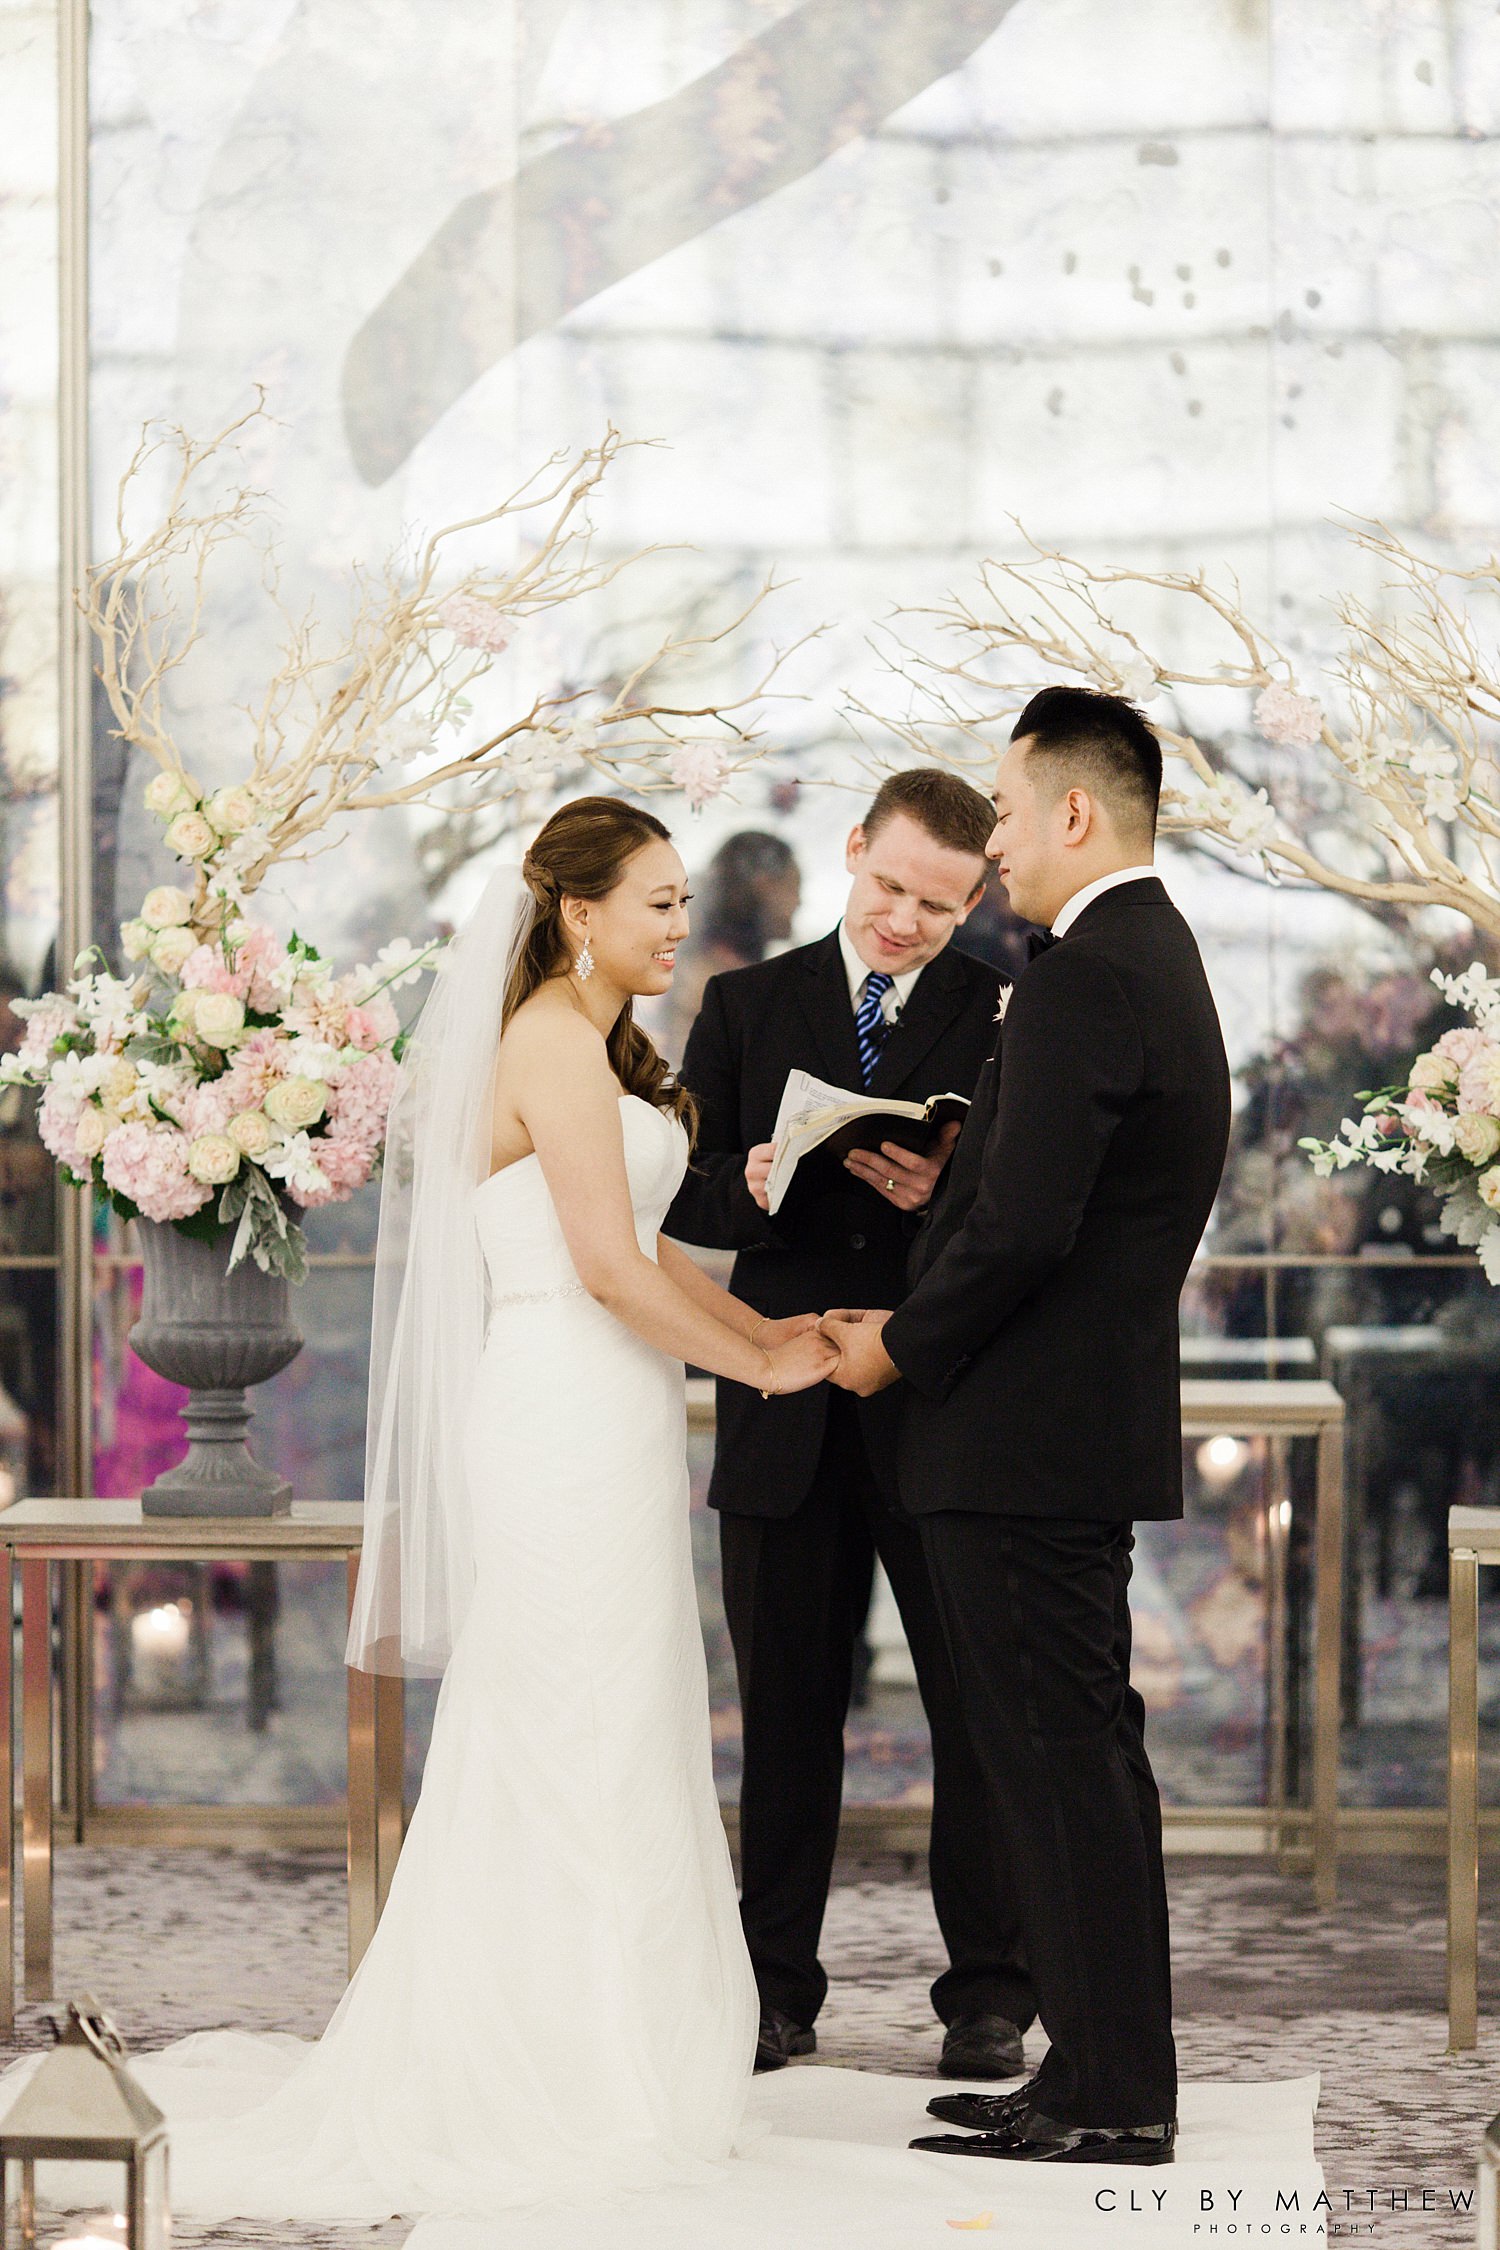 Indoor wedding ceremony at the Park Hyatt Hotel in NYC via Jubilee Events